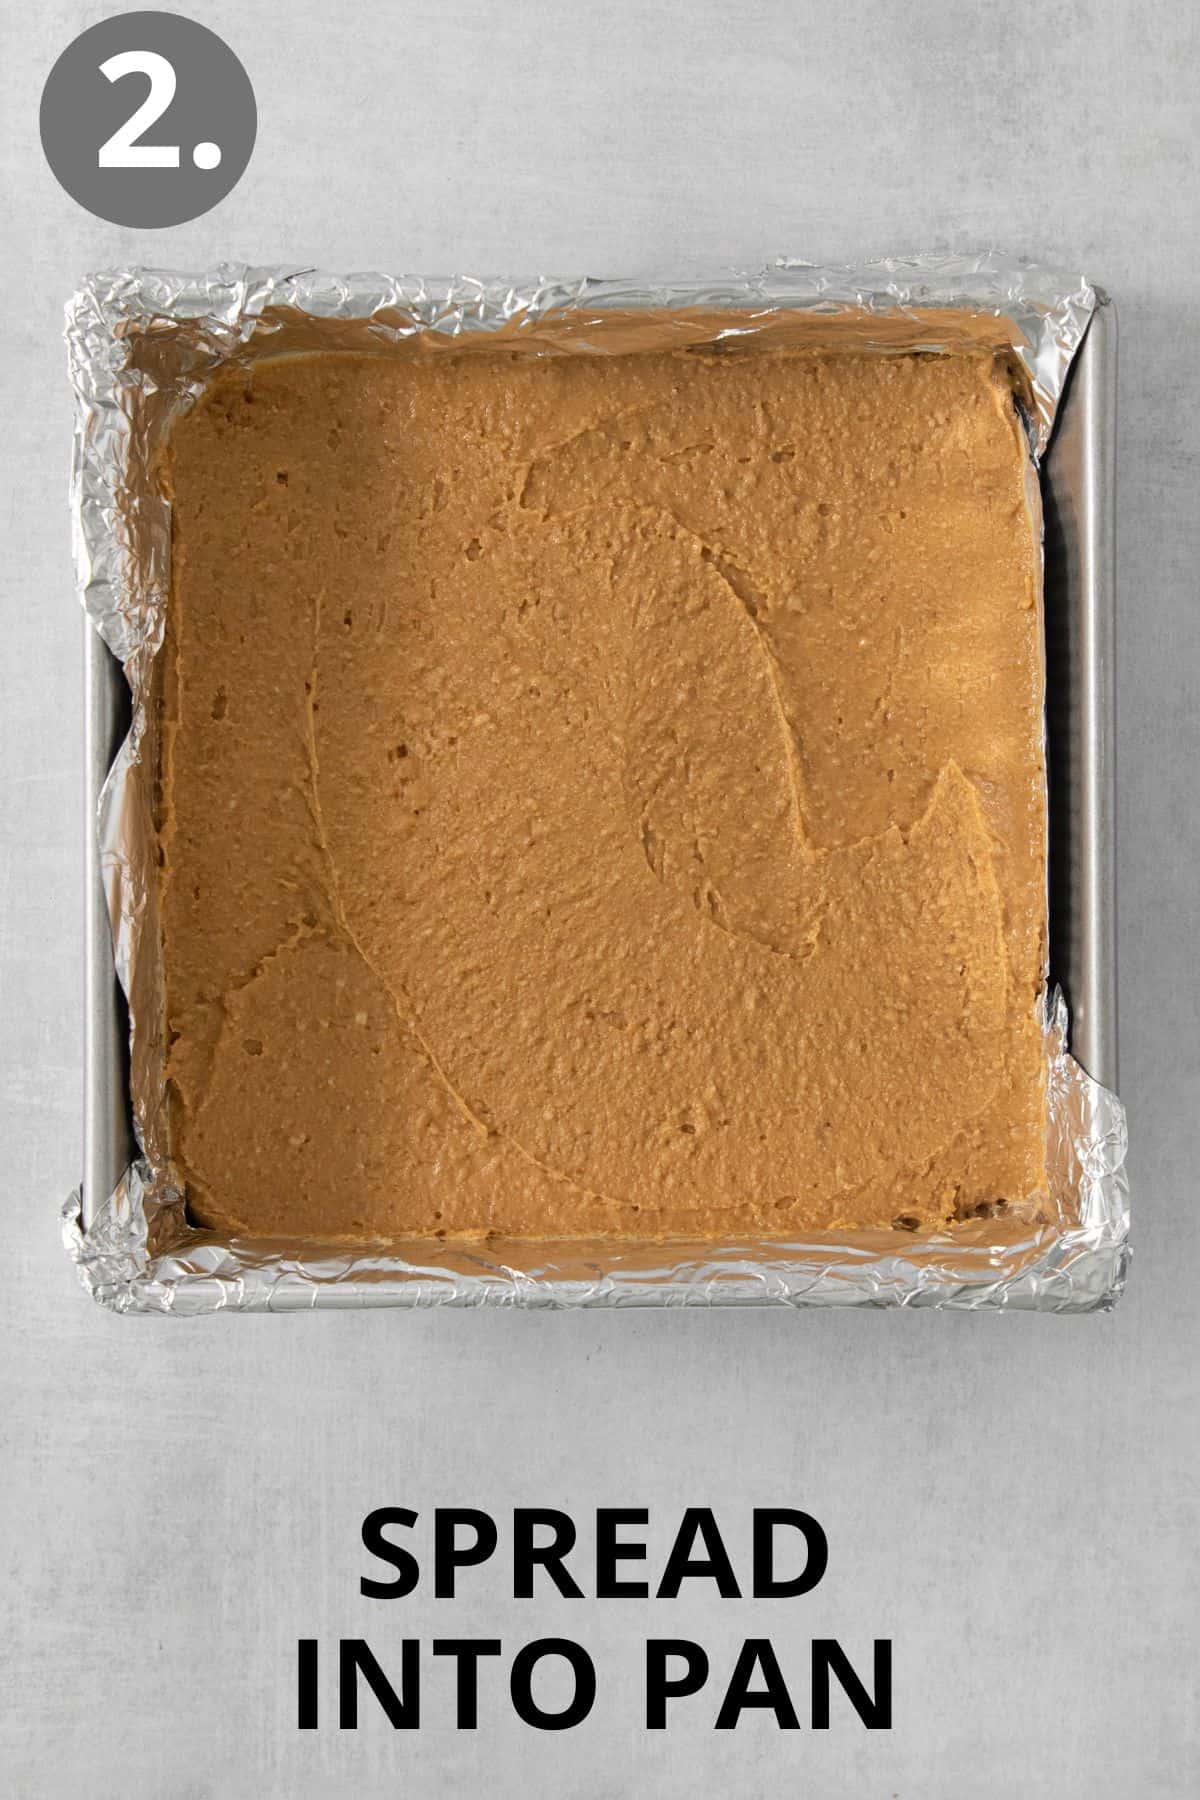 Peanut butter bar ingredients spread in a pan